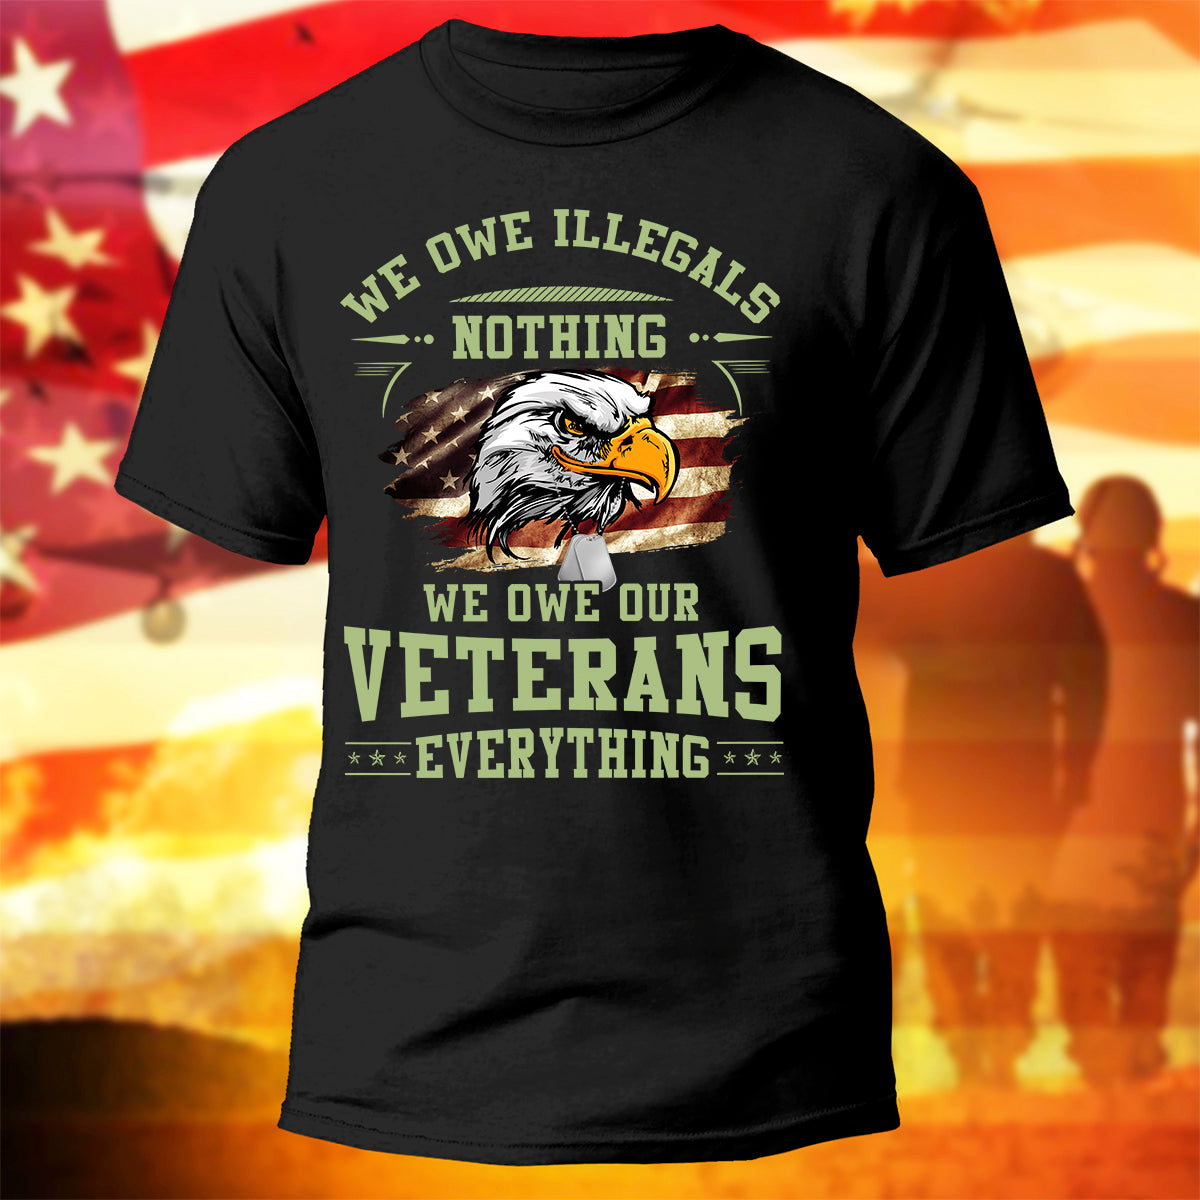 US Eagle Veteran T-Shirt We Owe Our Veterans Everything Shirt Veterans Gift